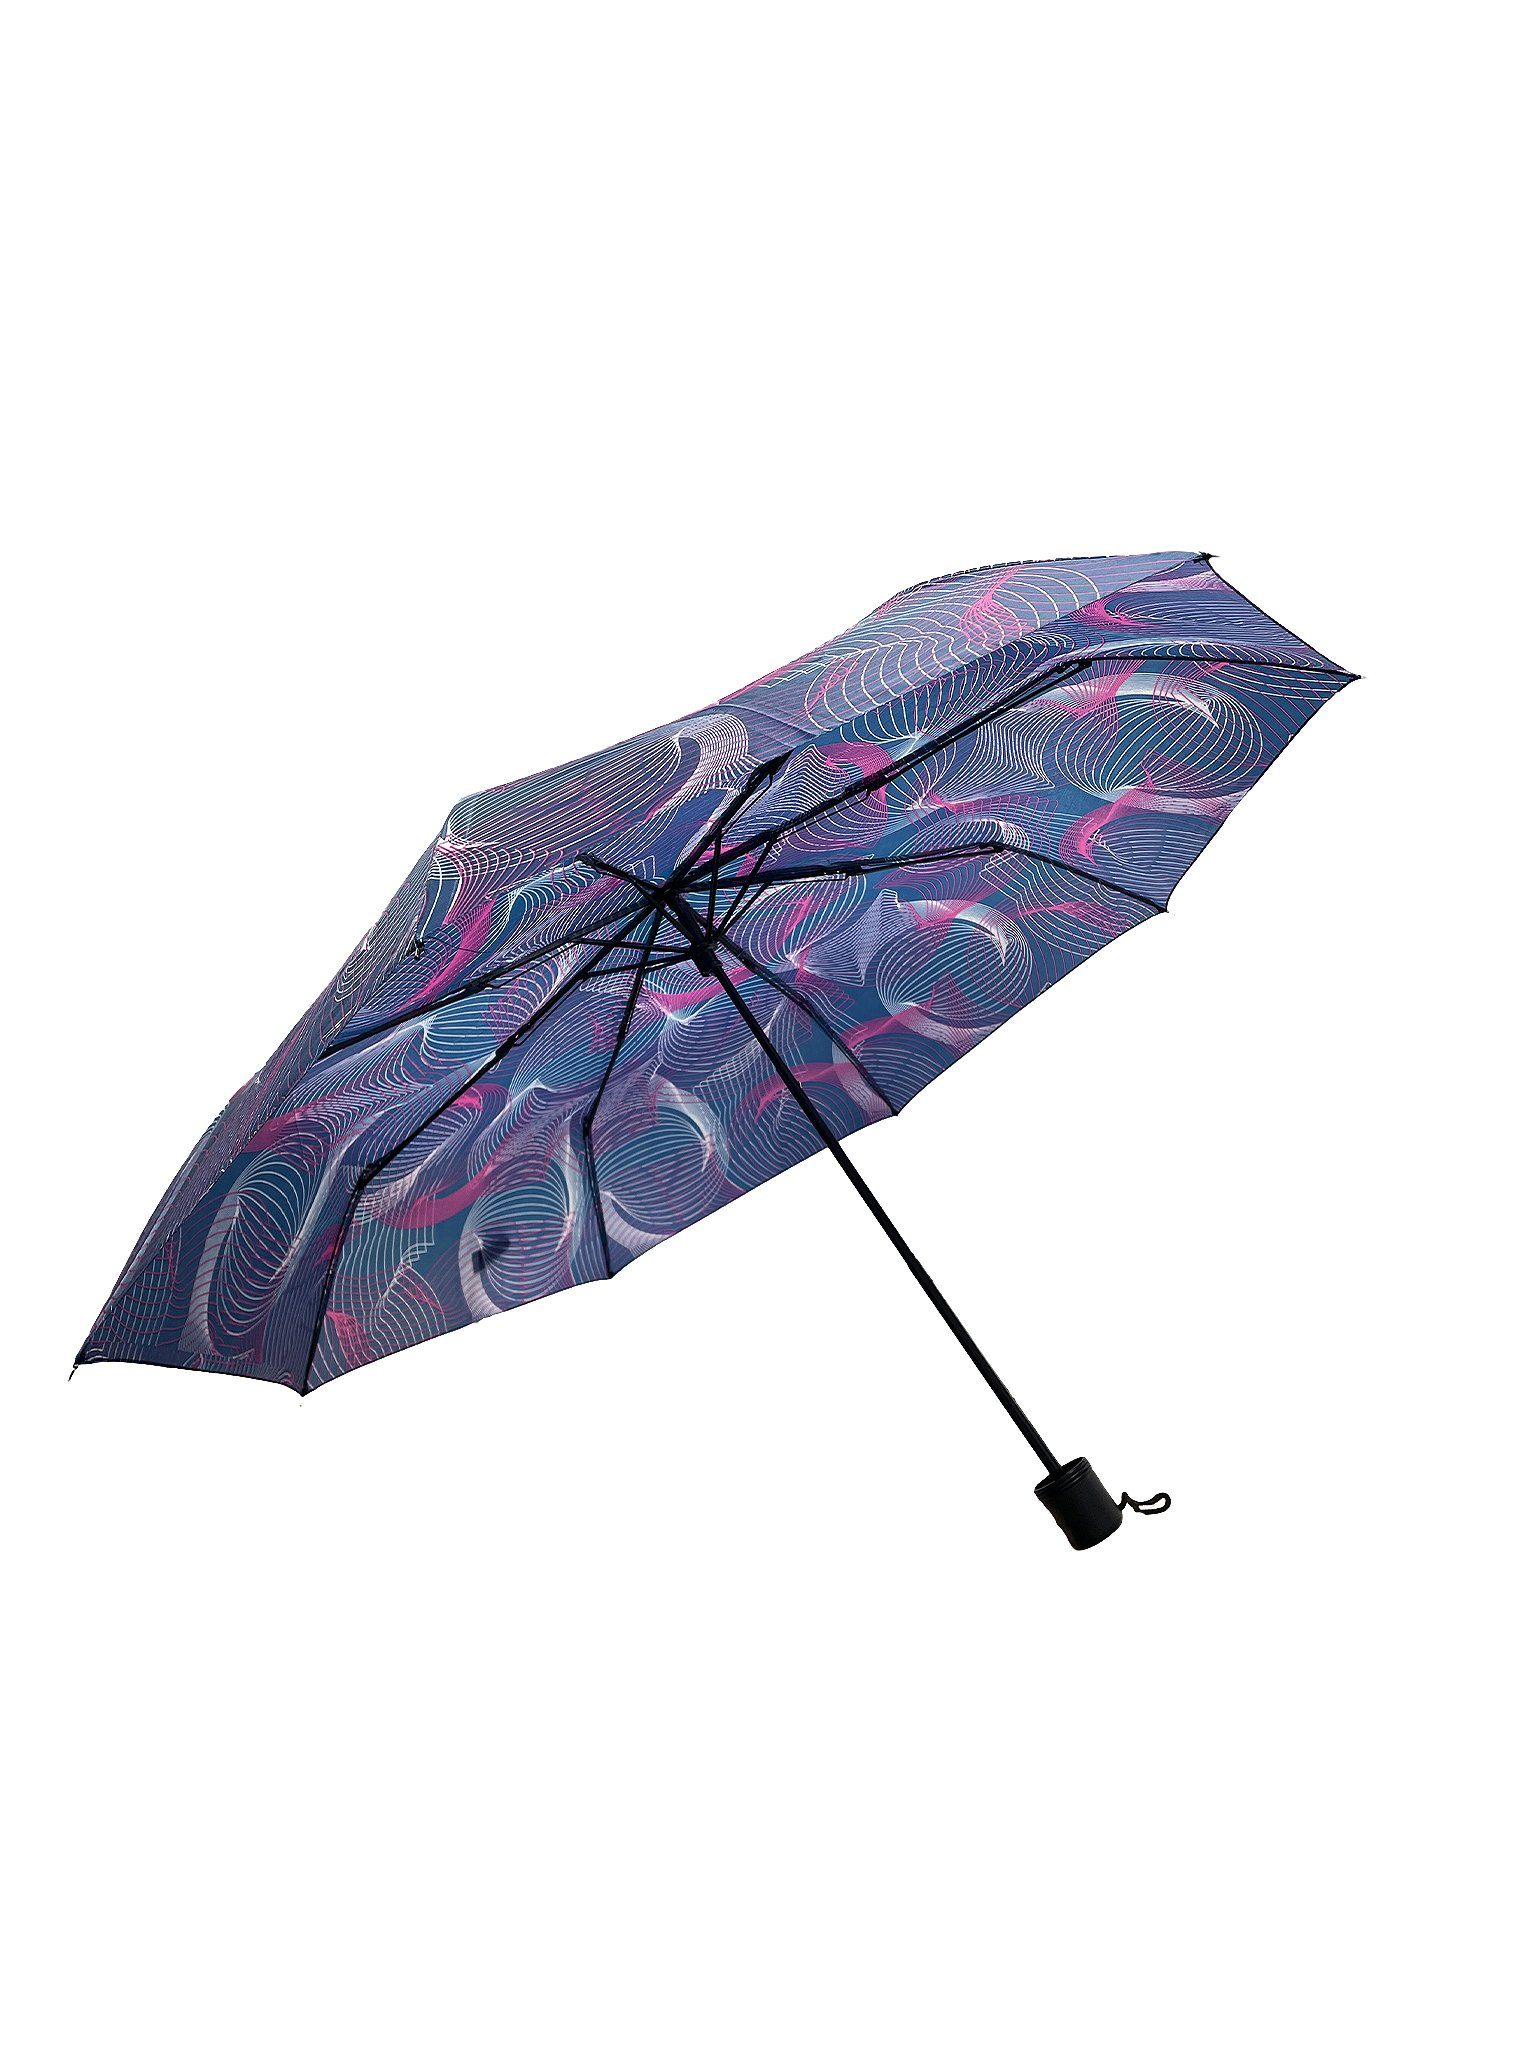 ANELY Taschenregenschirm Kleiner Regenschirm Paris Gemustert Taschenschirm, 6746 in Navy